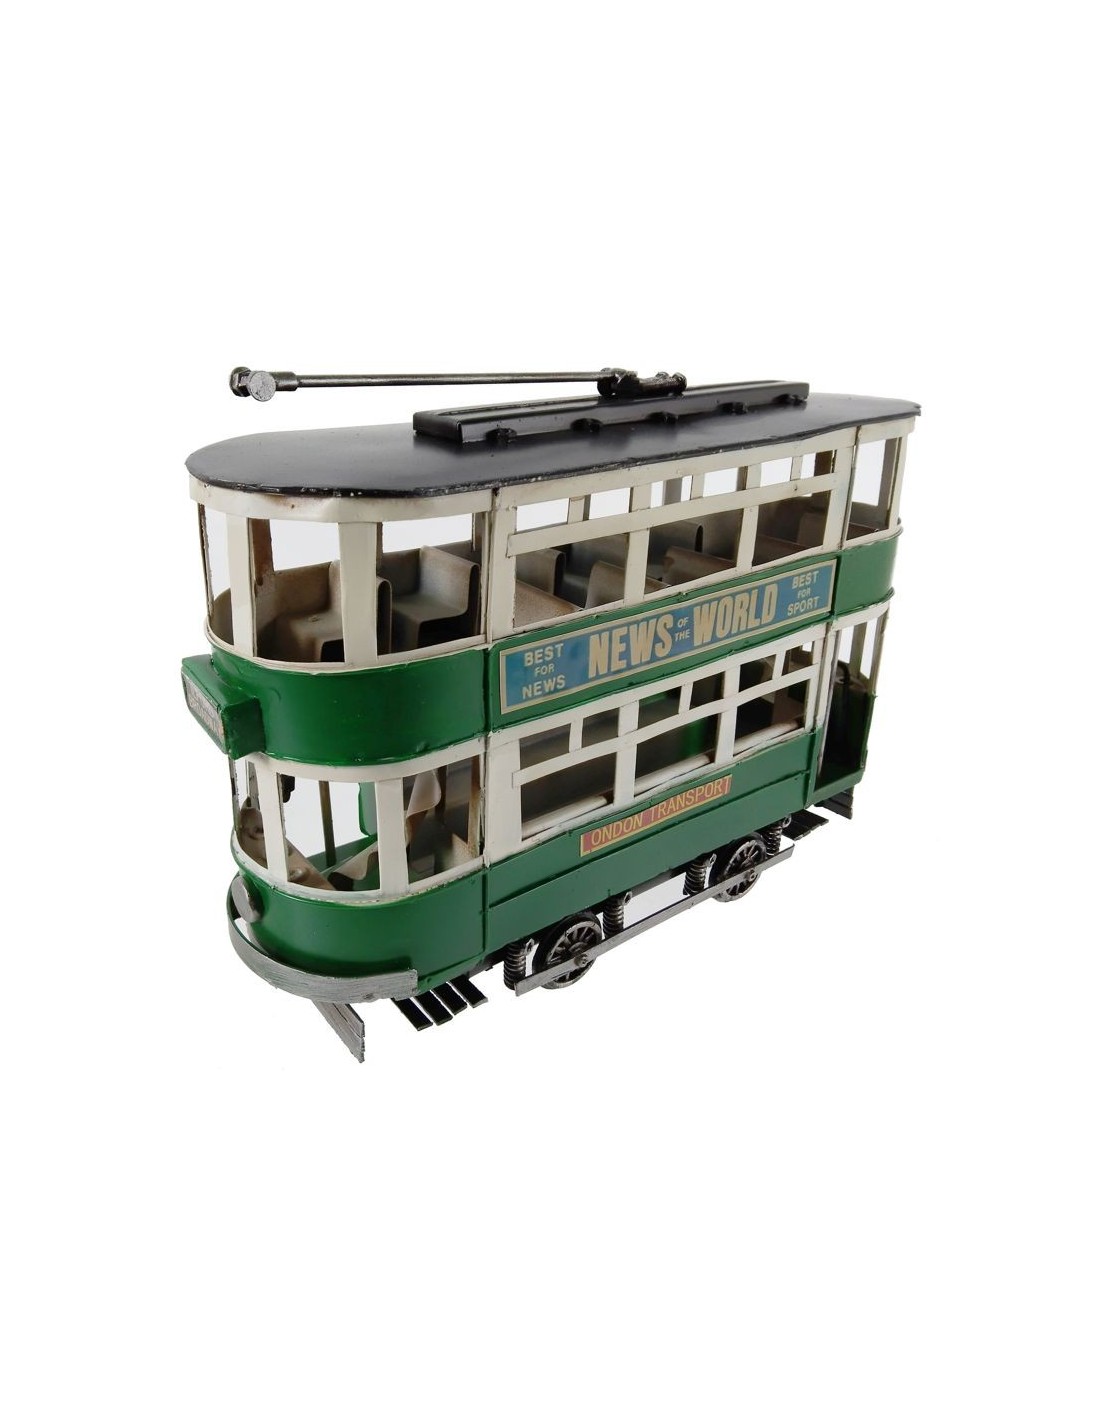 Tranvía replica retro color verde para coleccionables modelo dos pisos